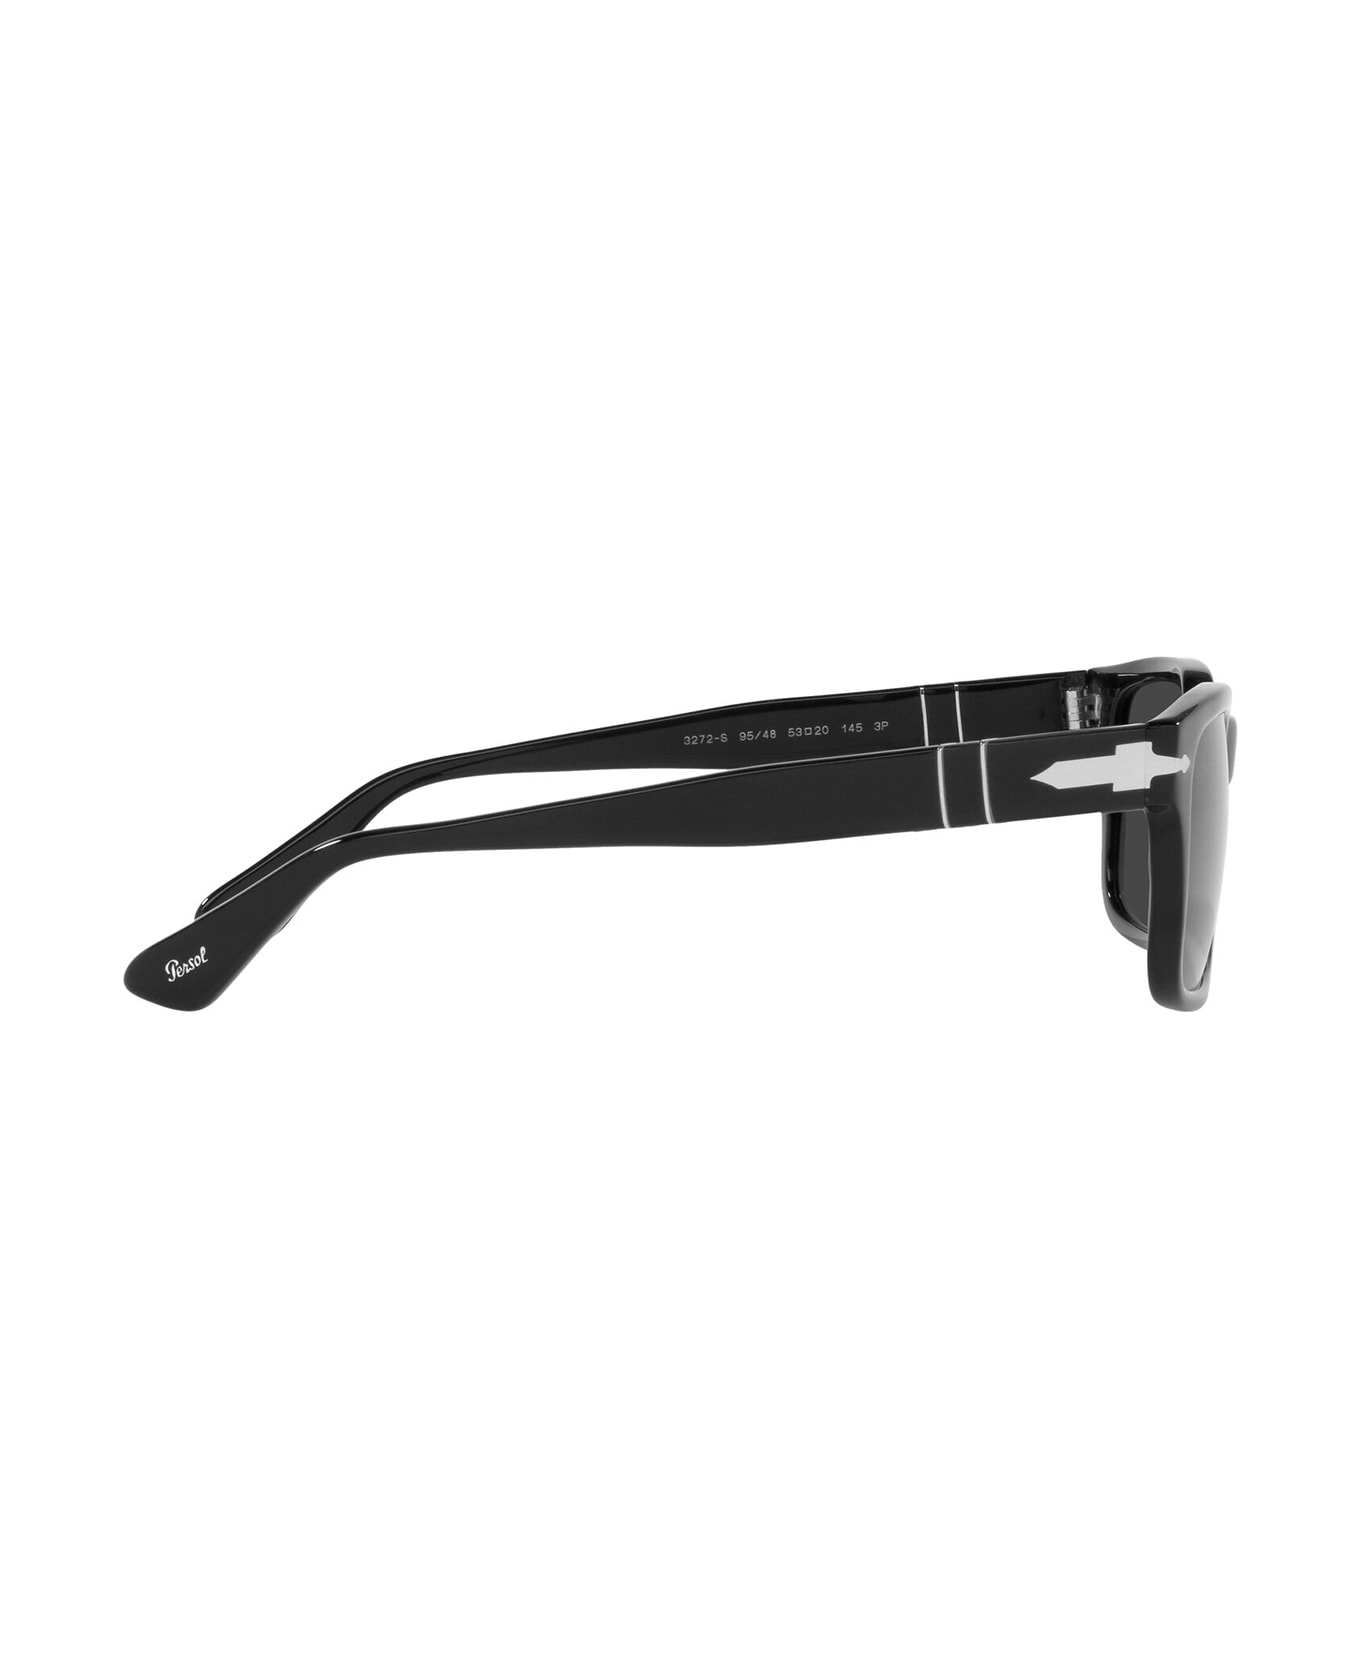 Persol Po3272s Black Sunglasses - Black サングラス